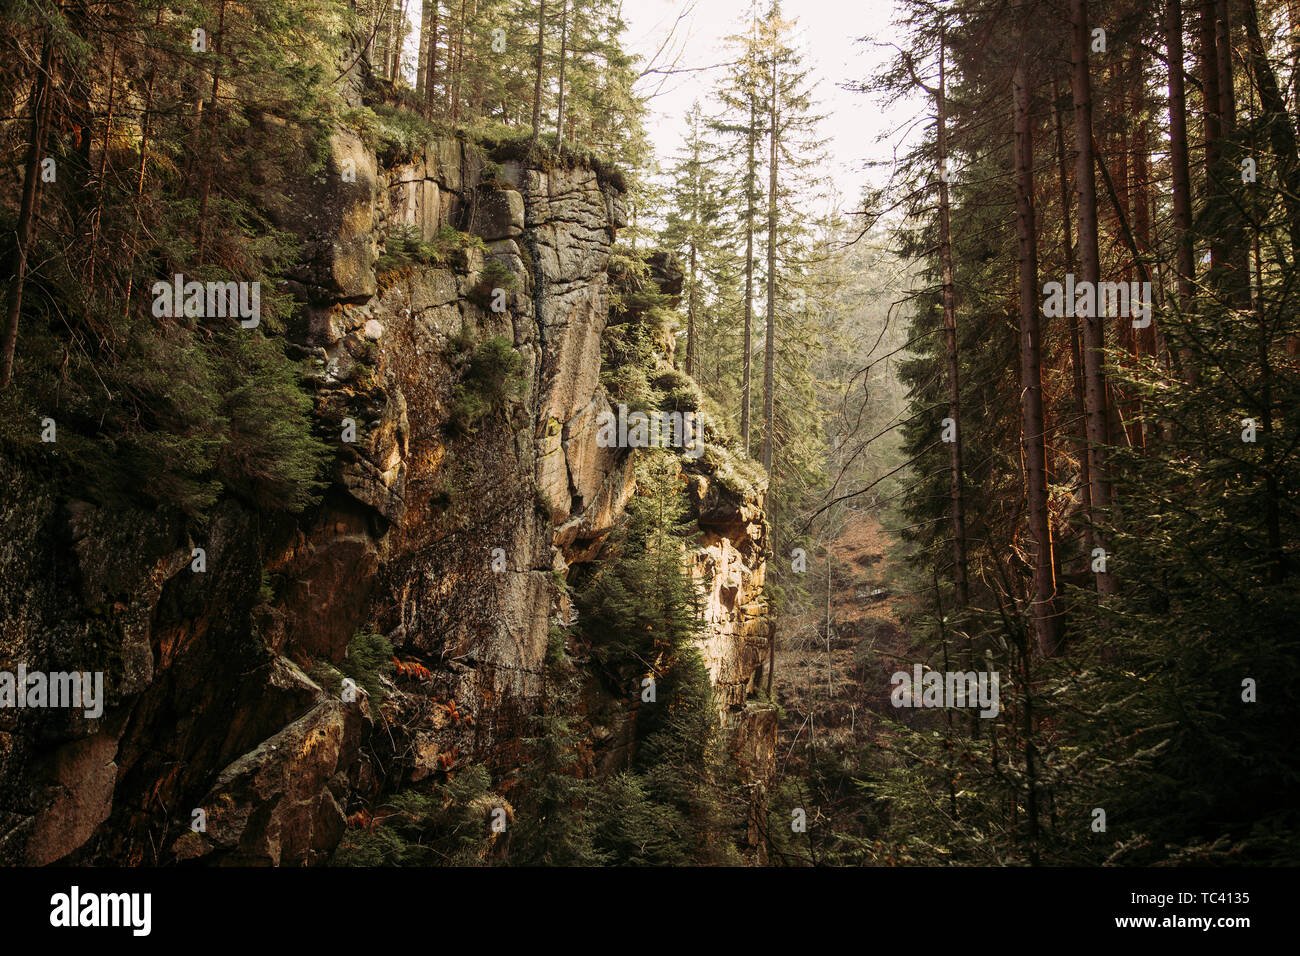 Magical mountain ravine in european pine forest Stock Photo